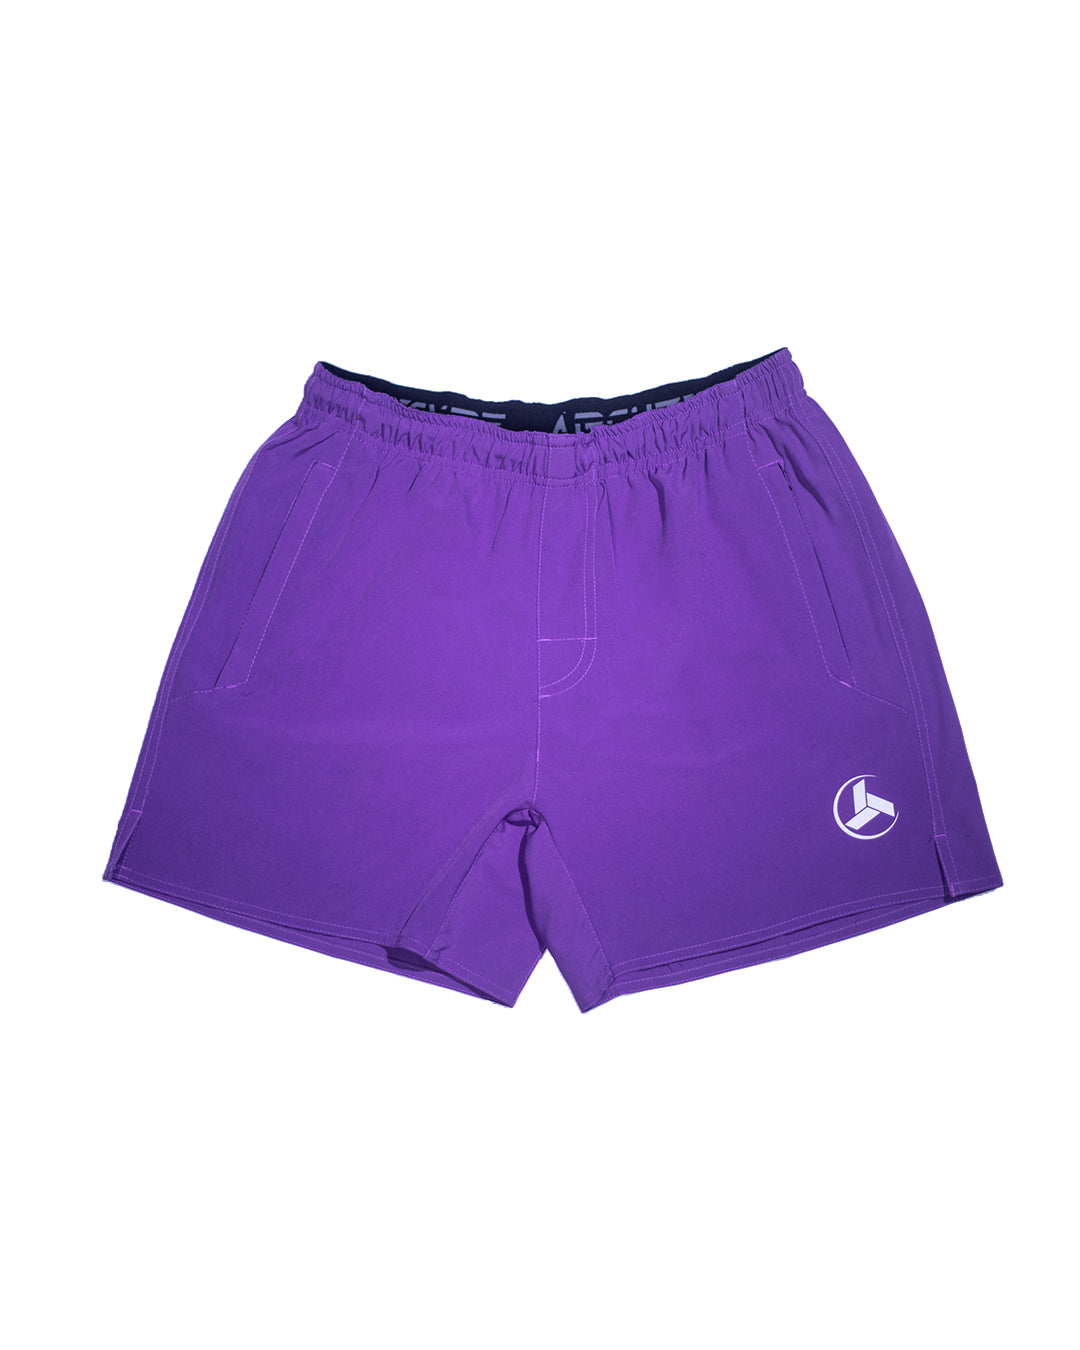 Archetype Athletic Purple Active Shorts M (32-33)